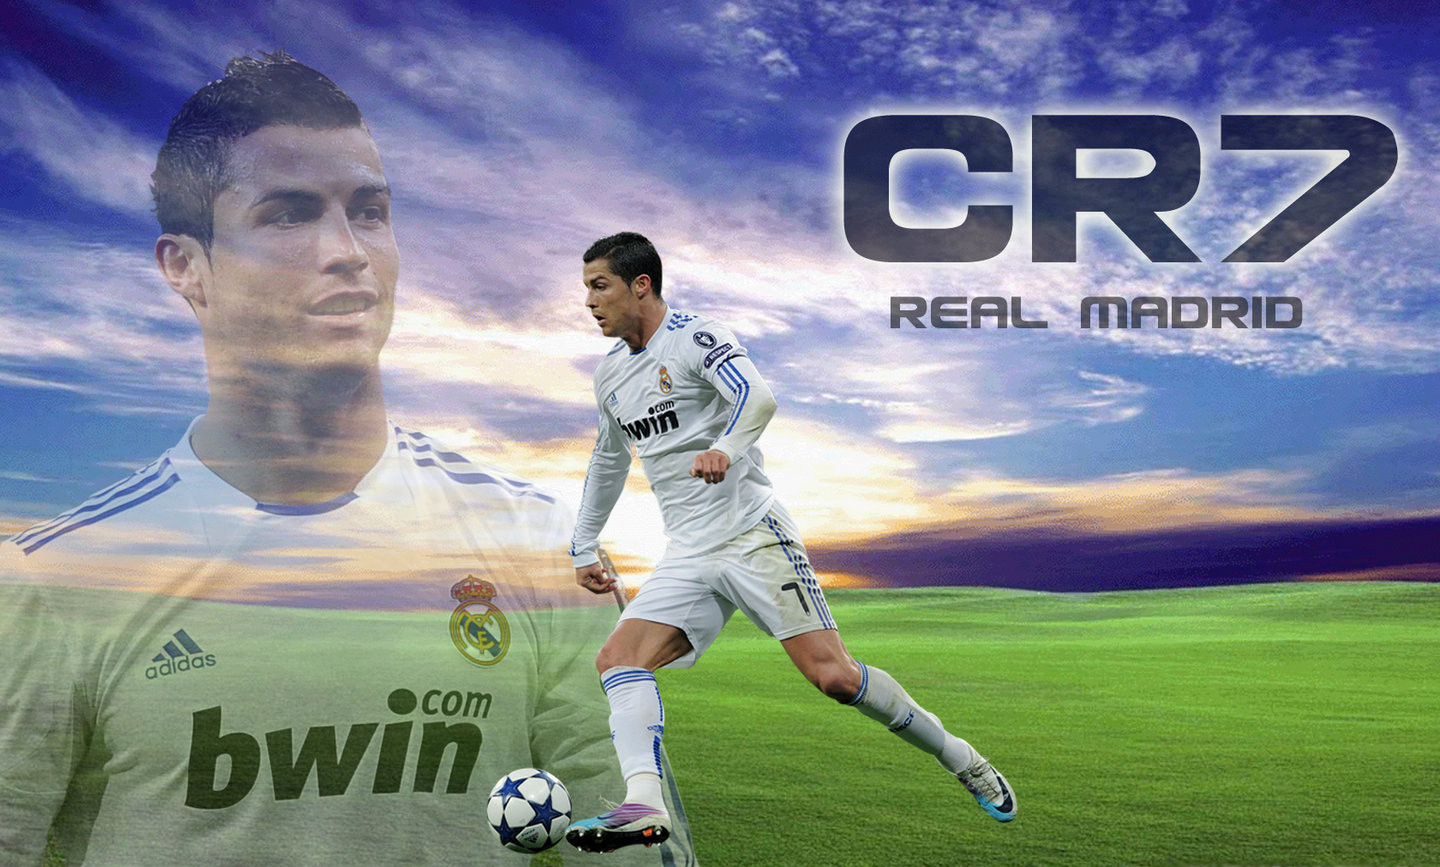 Cristiano Ronaldo On Real Madrid Wallpaper Full Hd - Imagenes De Real Madrid Cr7 - HD Wallpaper 